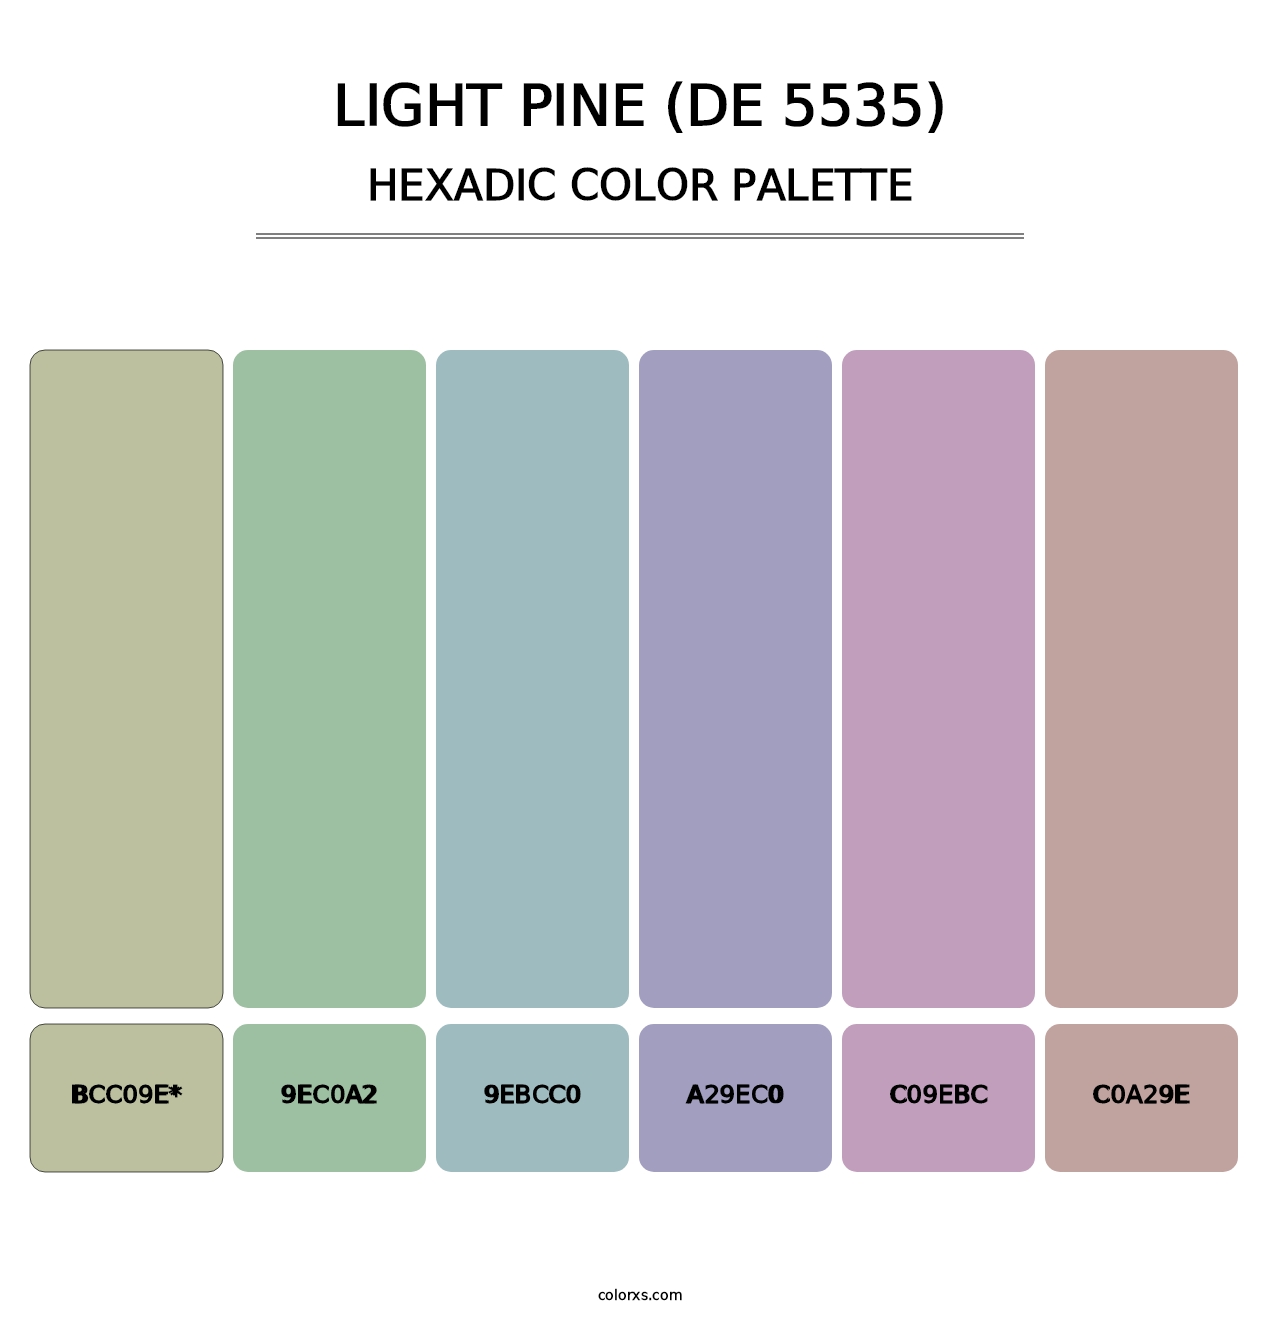 Light Pine (DE 5535) - Hexadic Color Palette